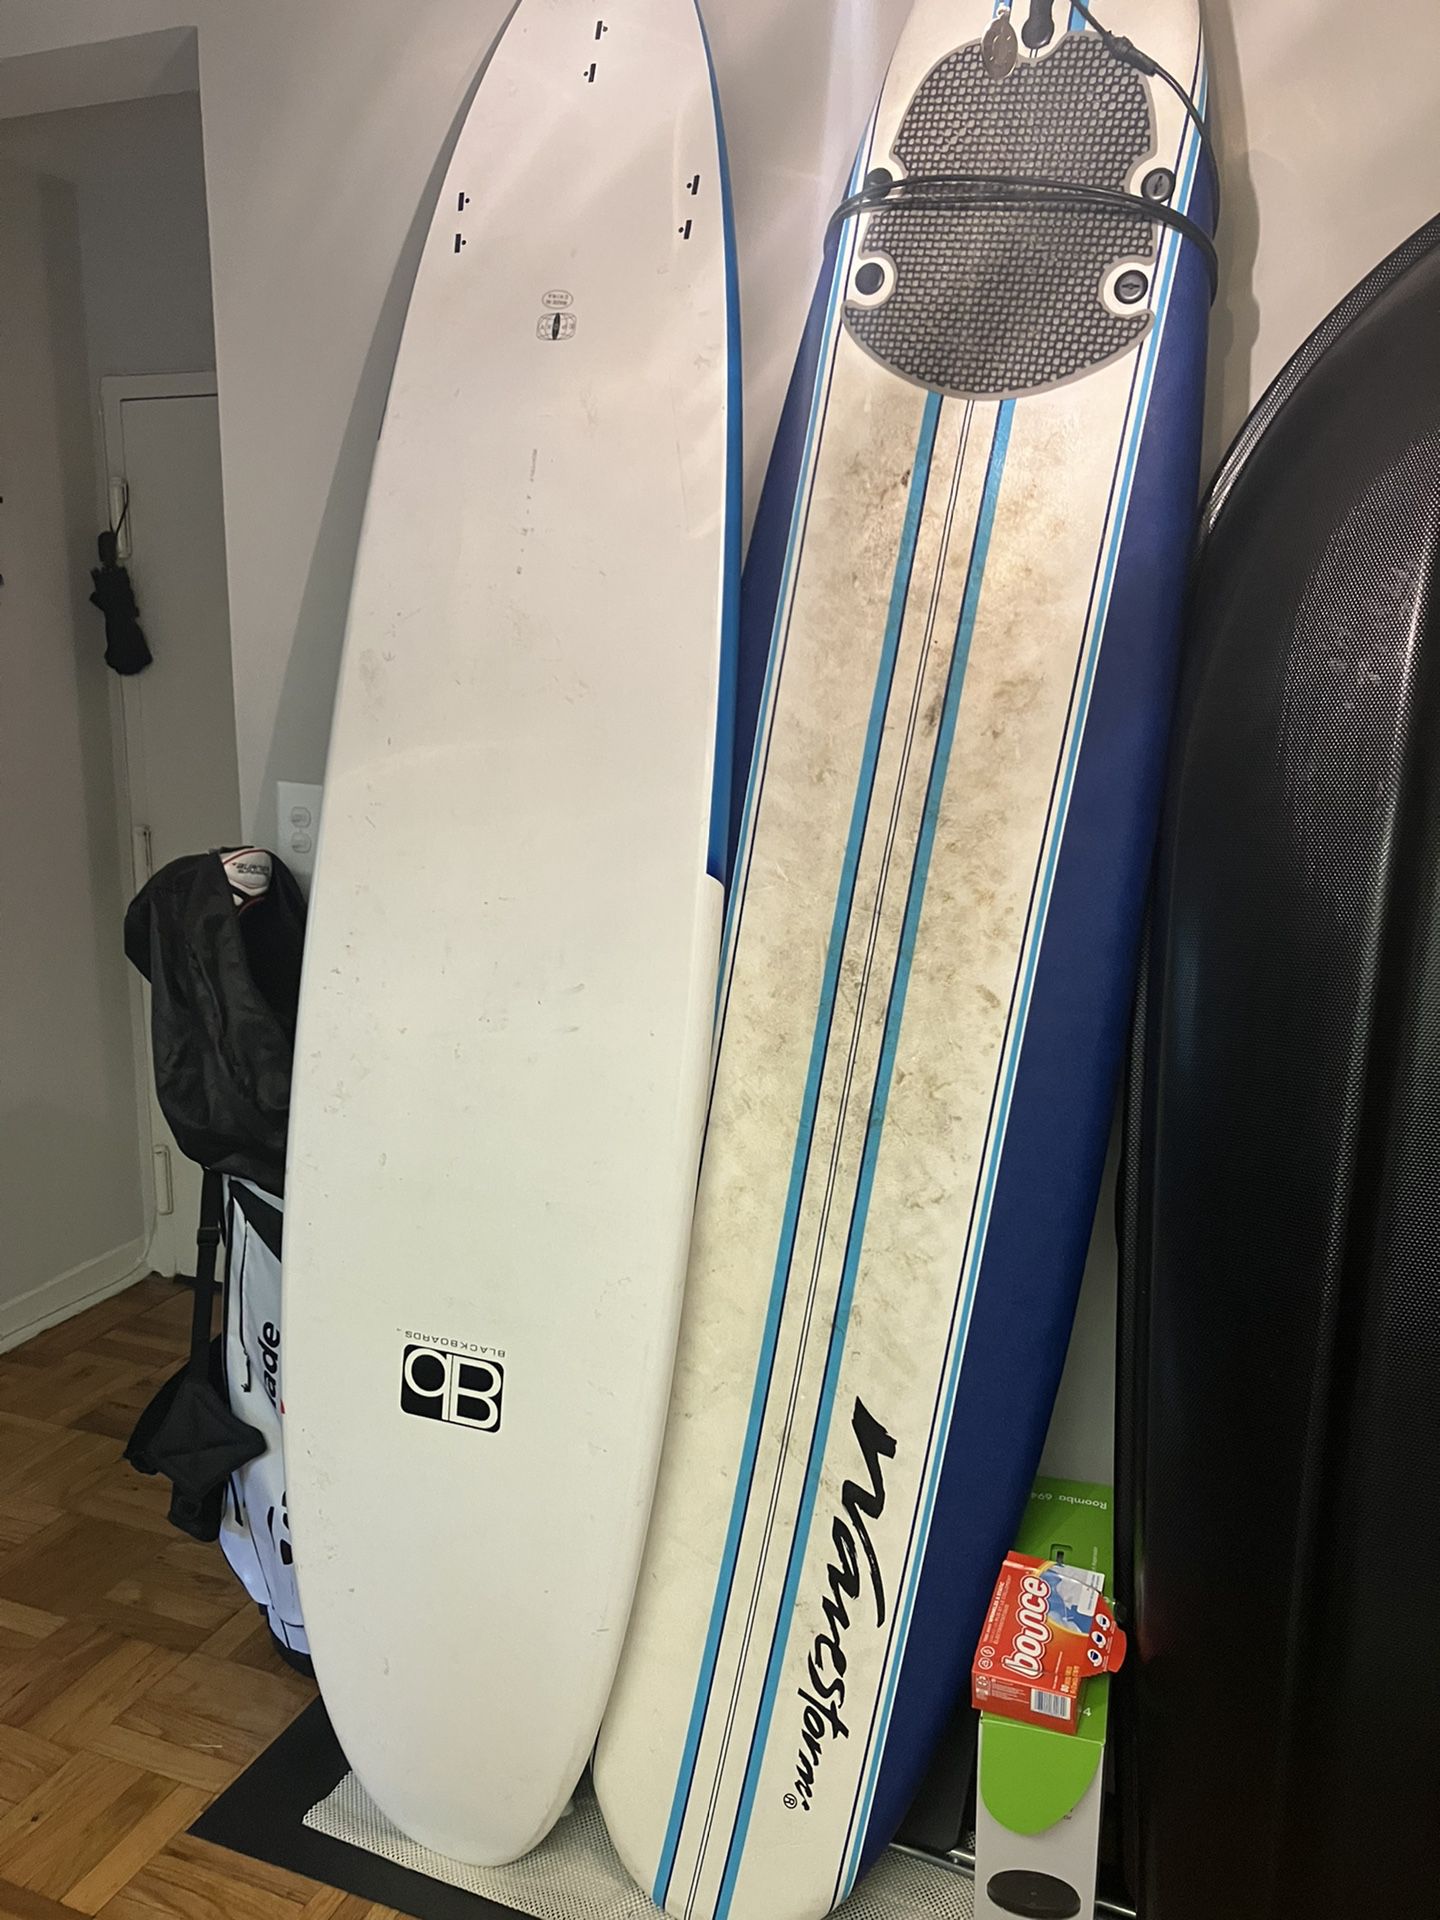 Surf Boards (1 Wavestorm & 1 Fiberglass)